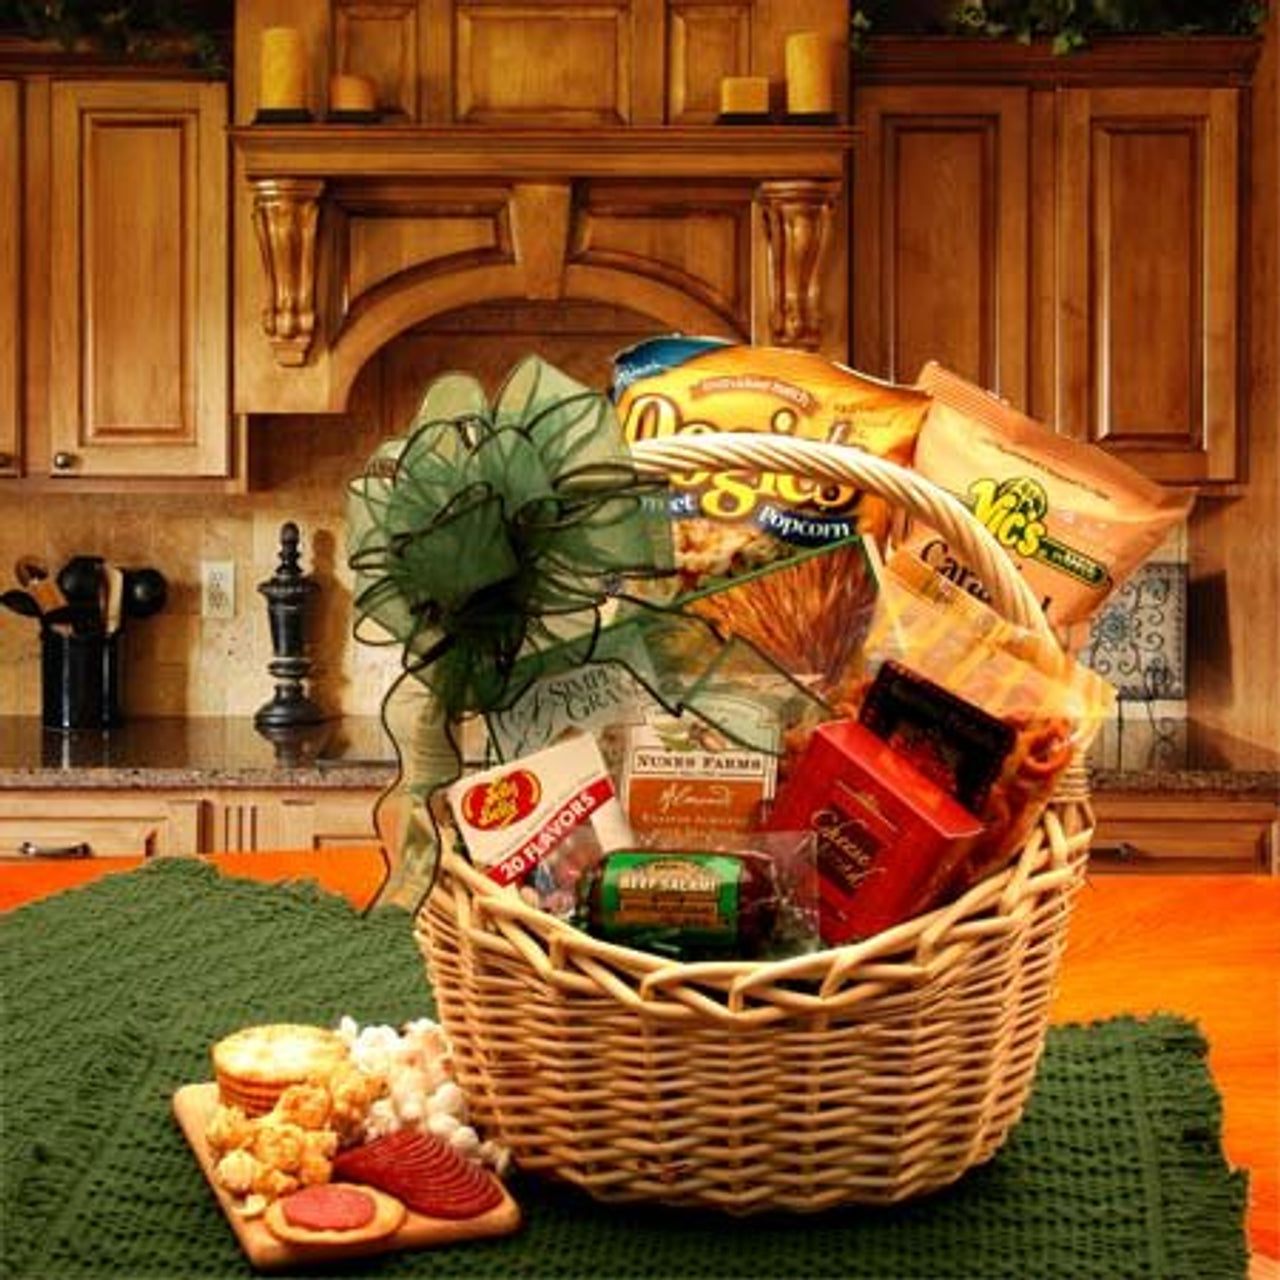 Snackers Delights Gift Basket - food gift basket